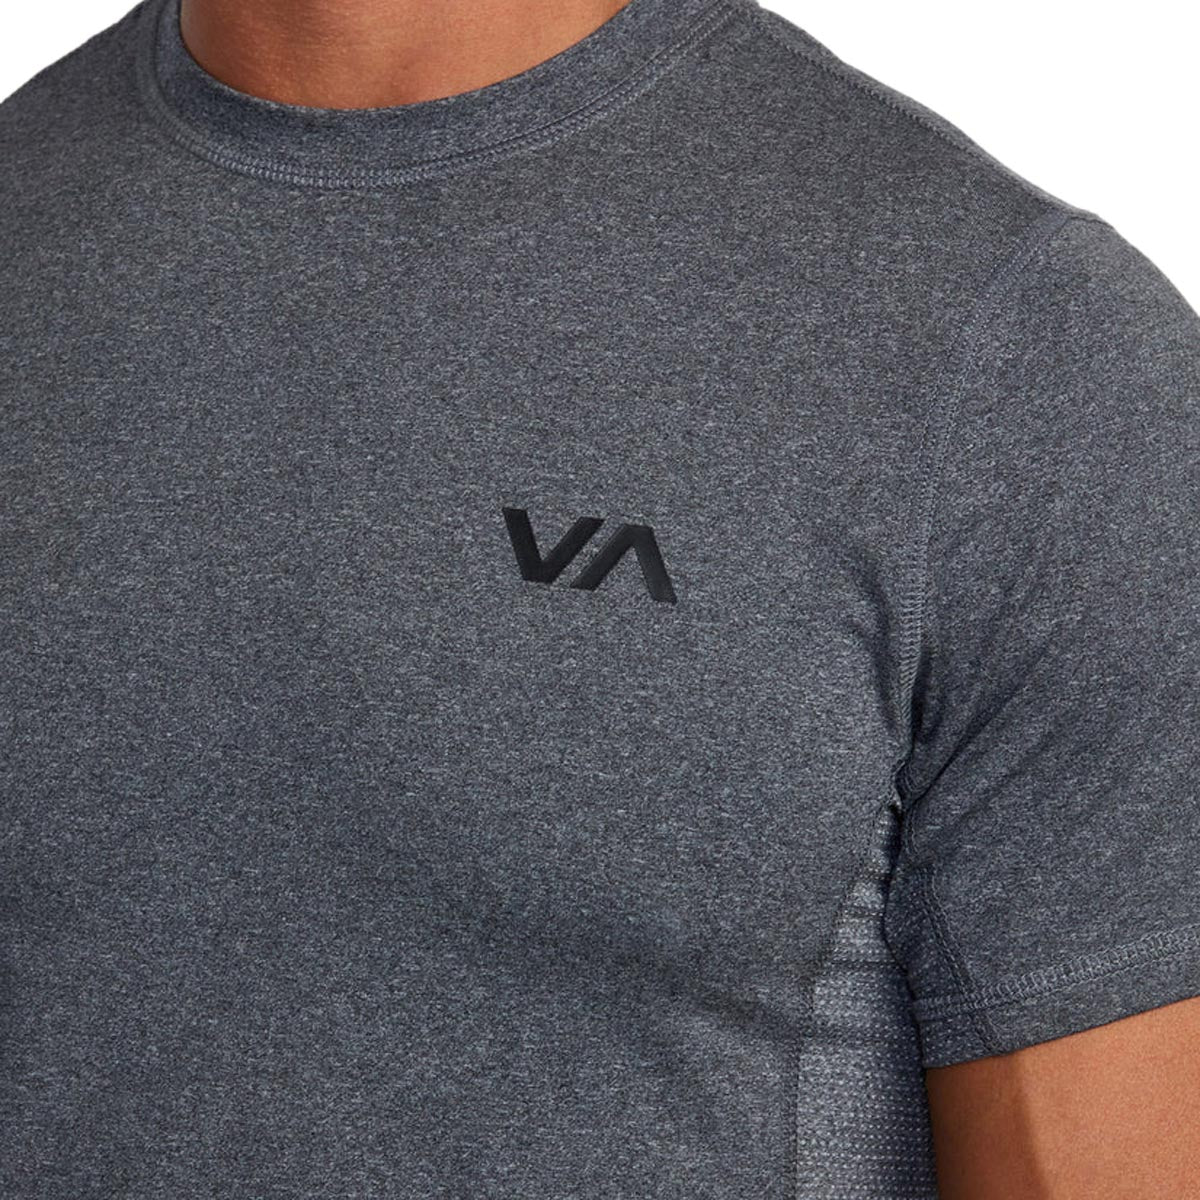 RVCA Sport Vent Shirt - Charcoal Heather image 4